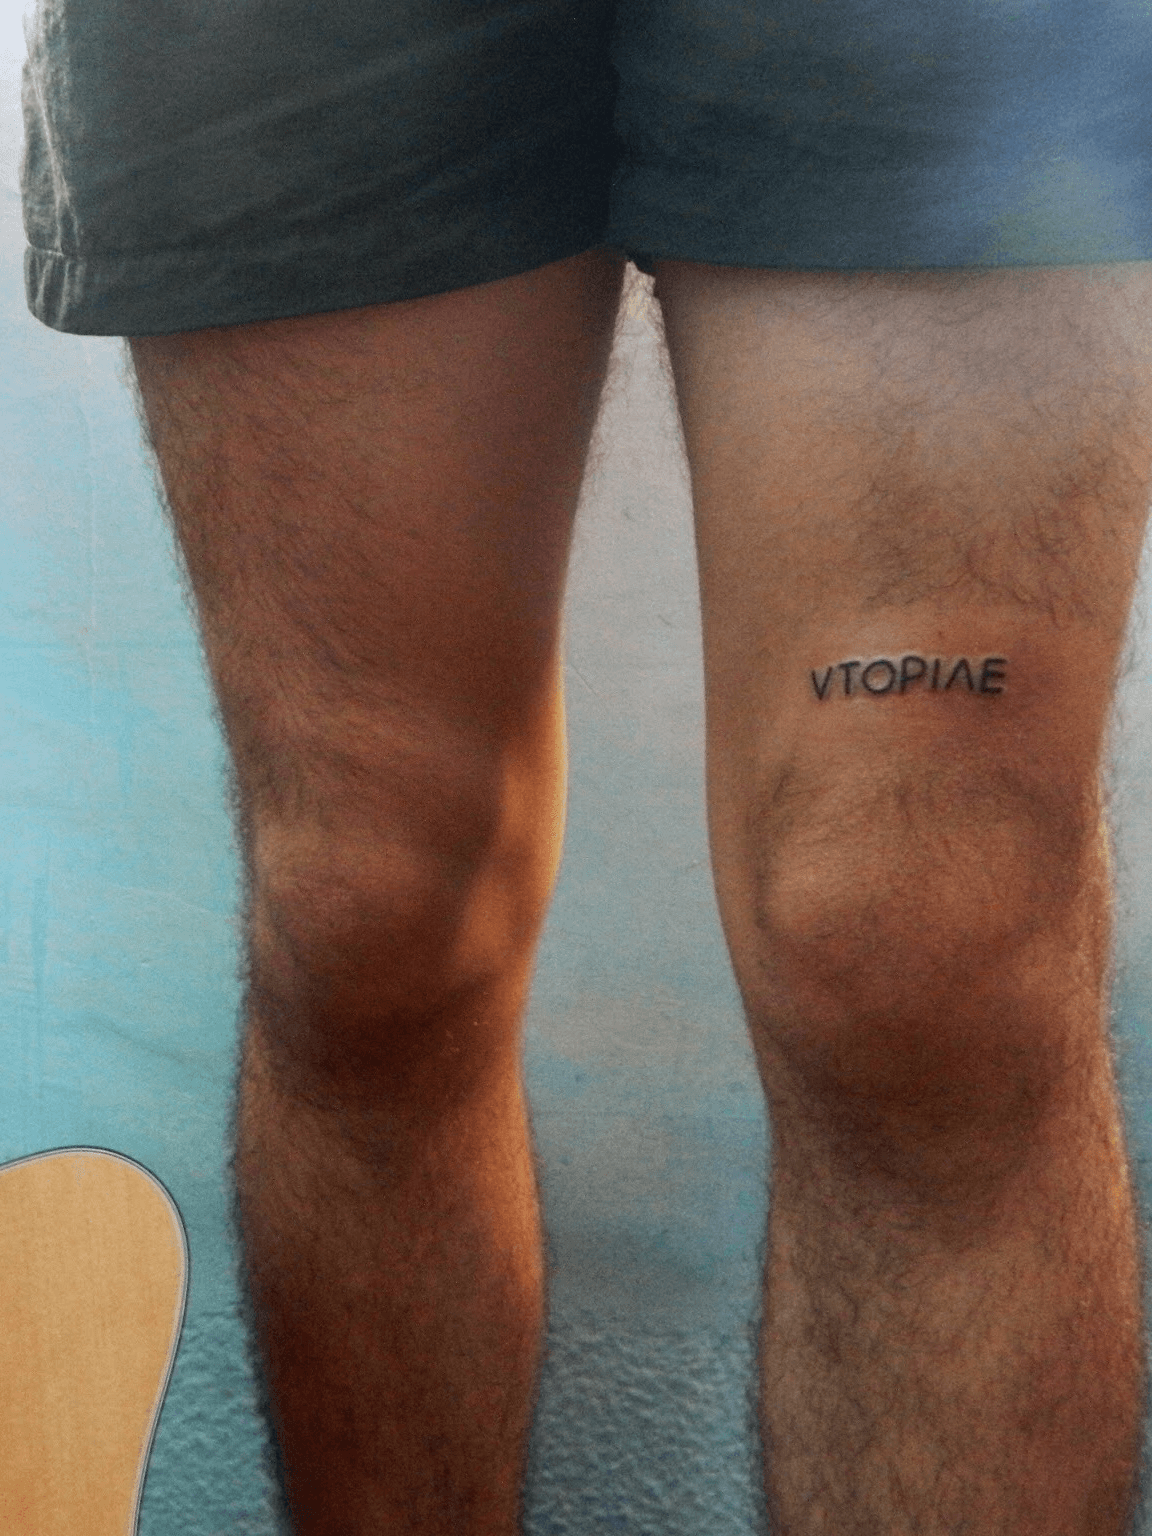 Knee tattoos  Best Tattoo Ideas Gallery